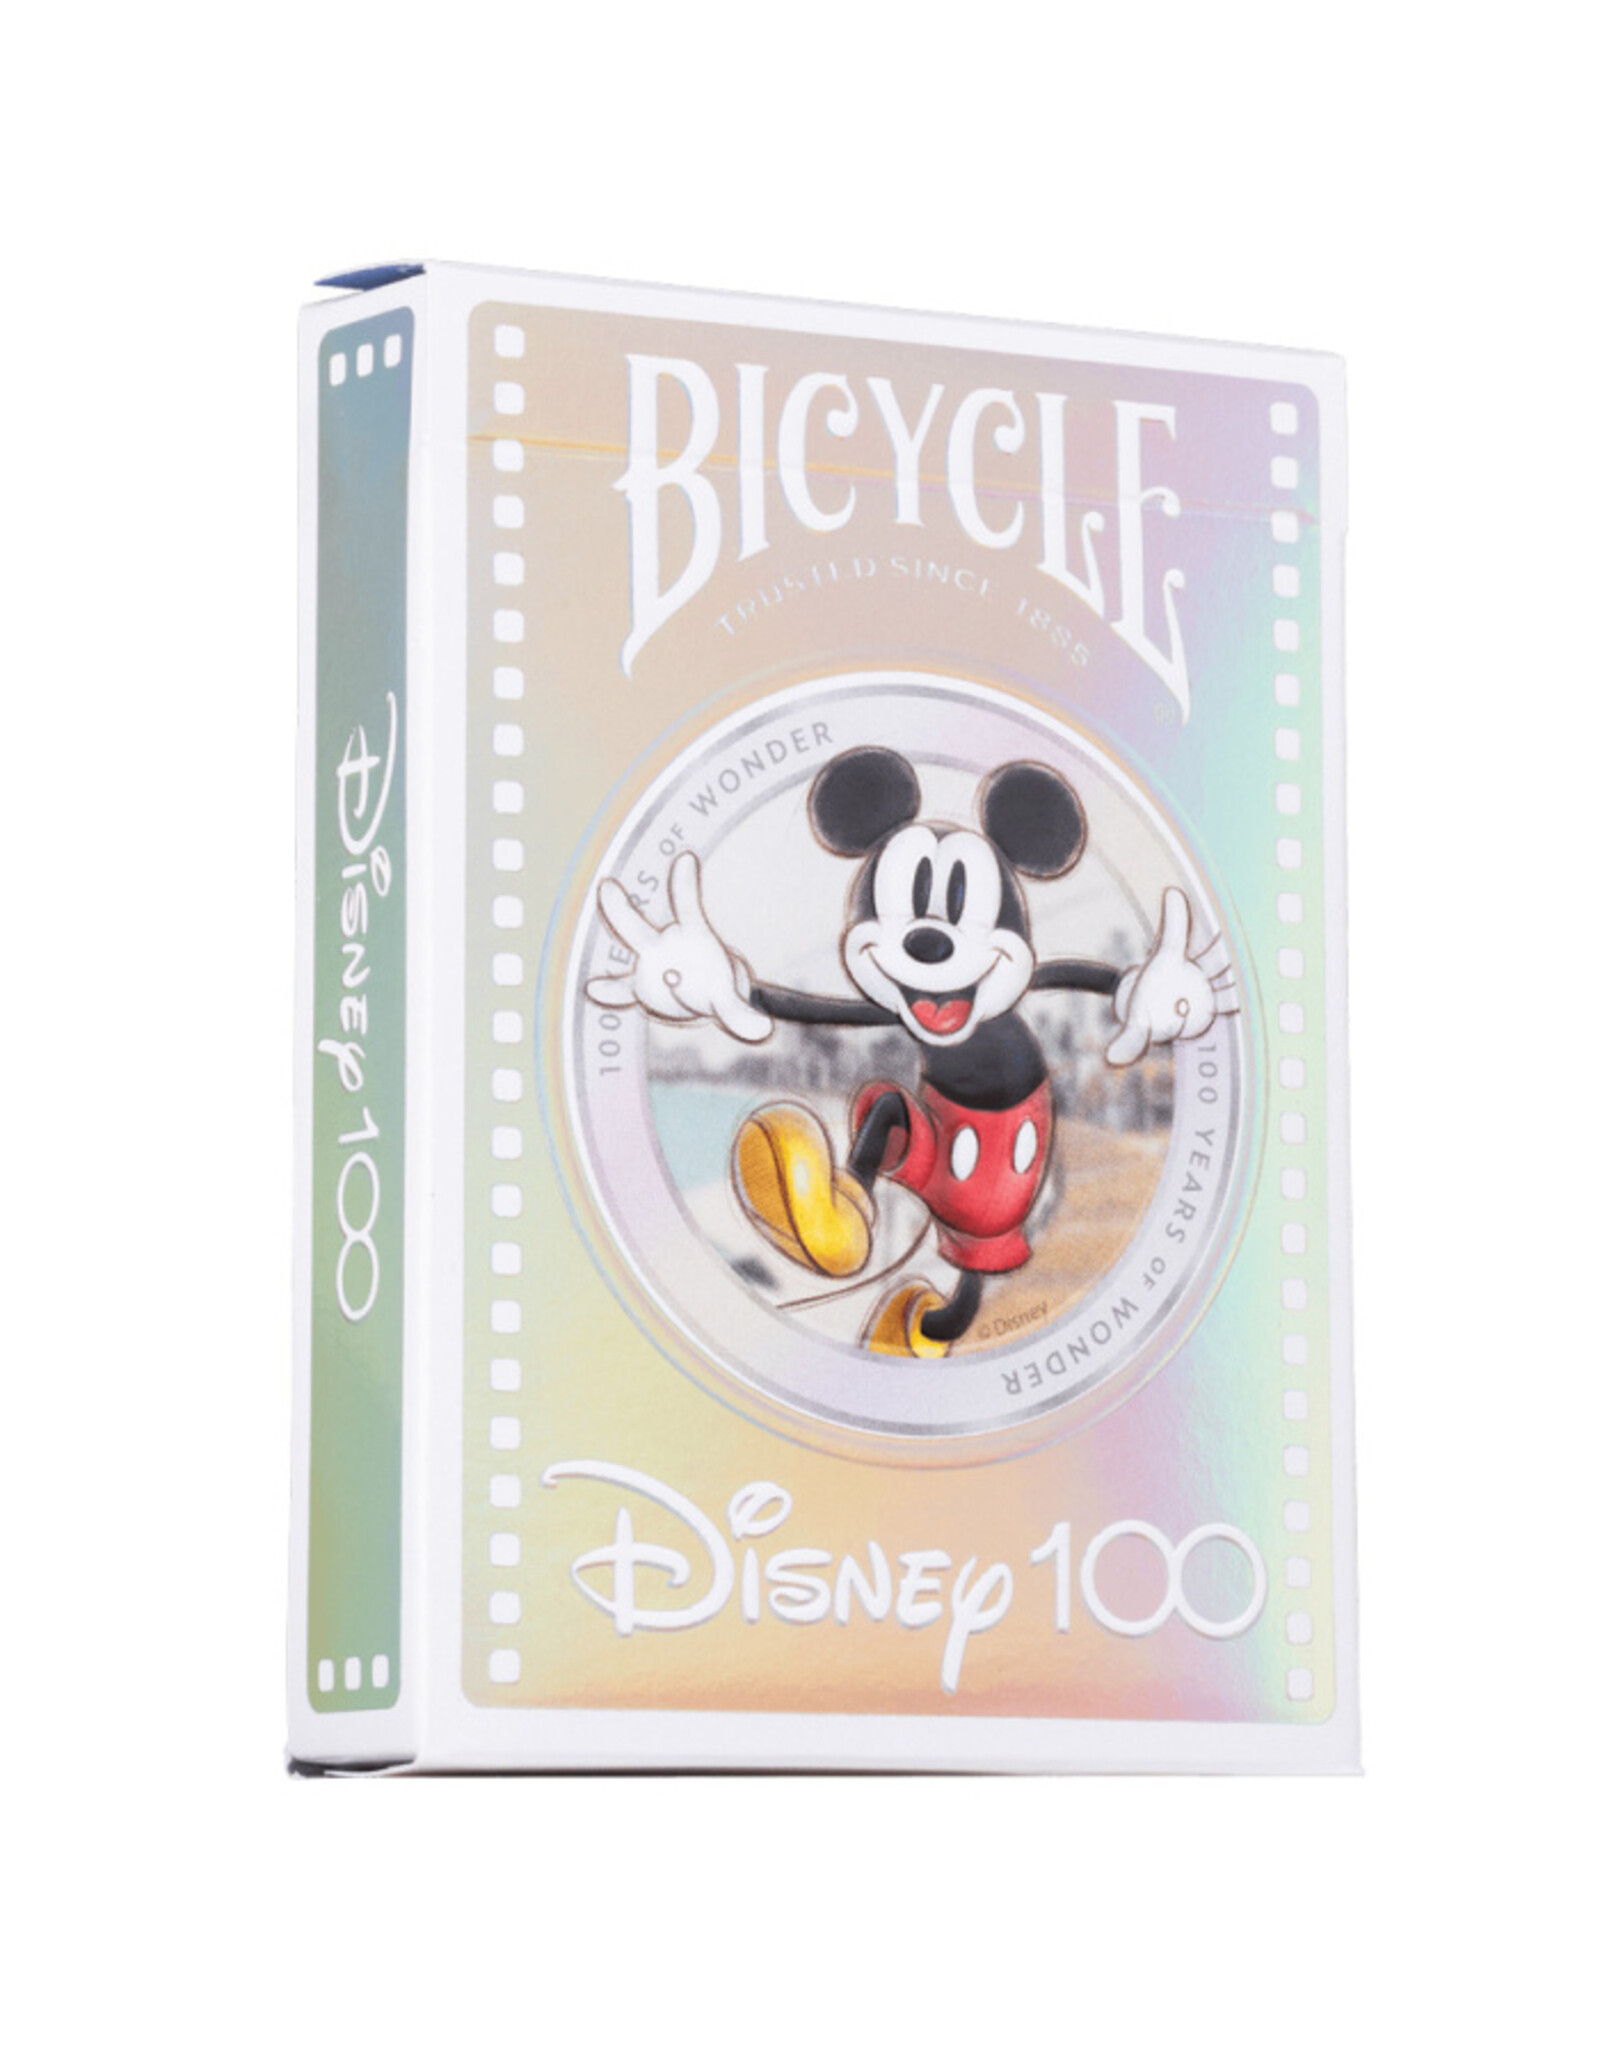 Bicycle Playing Cards: Bicycle: Disney 100